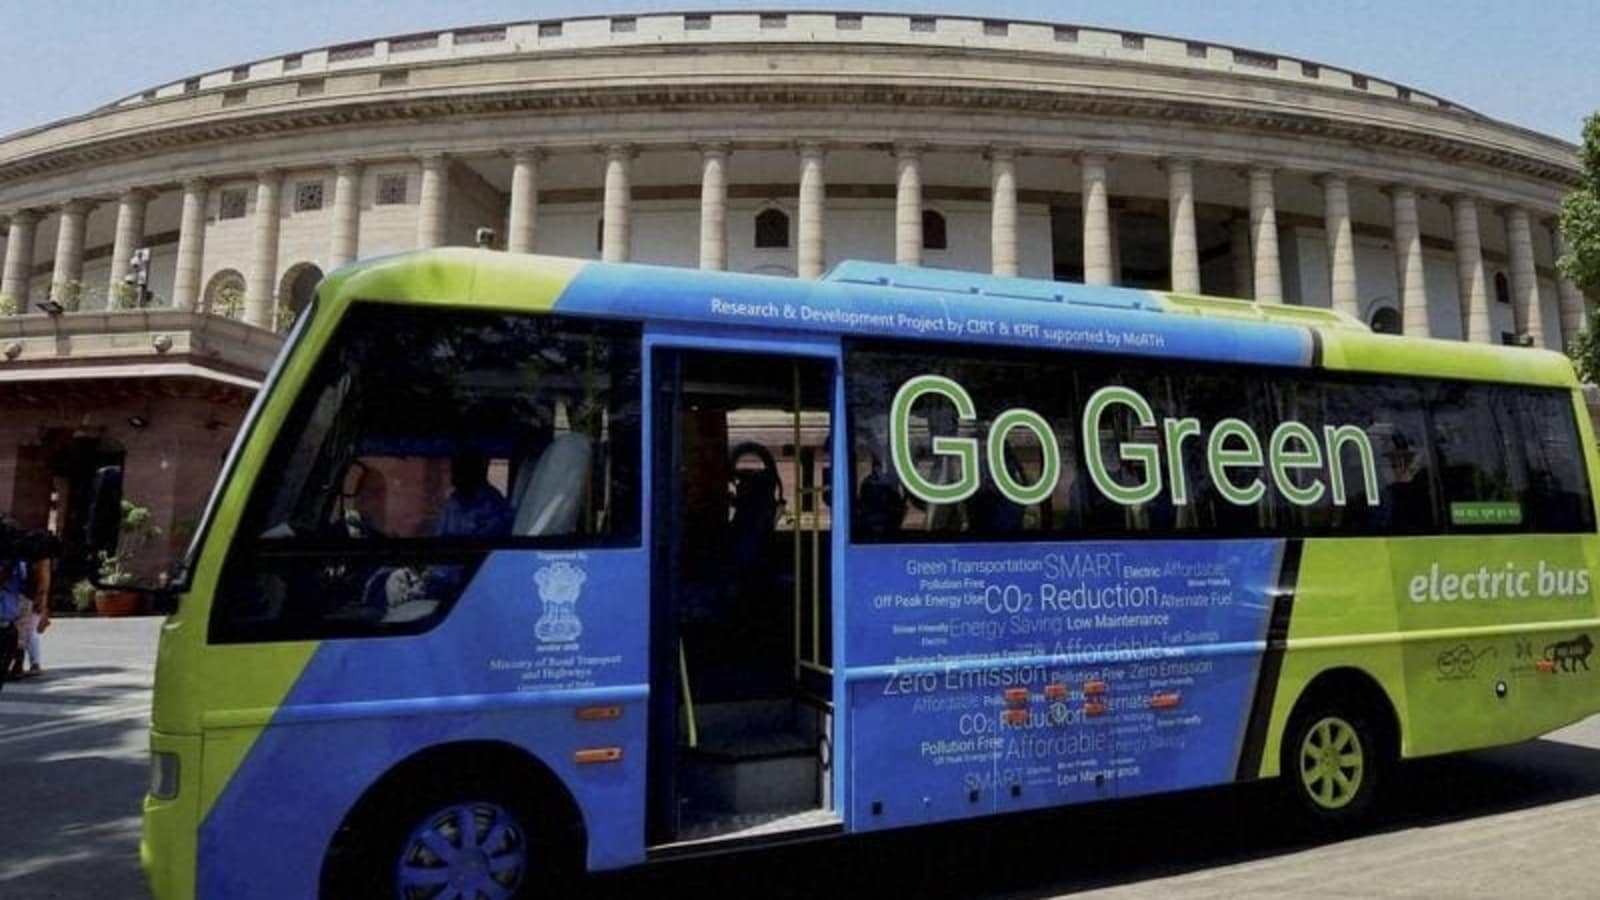 Delhiites can enjoy free electric bus rides for three days, says Kejriwal govt | Latest News Delhi